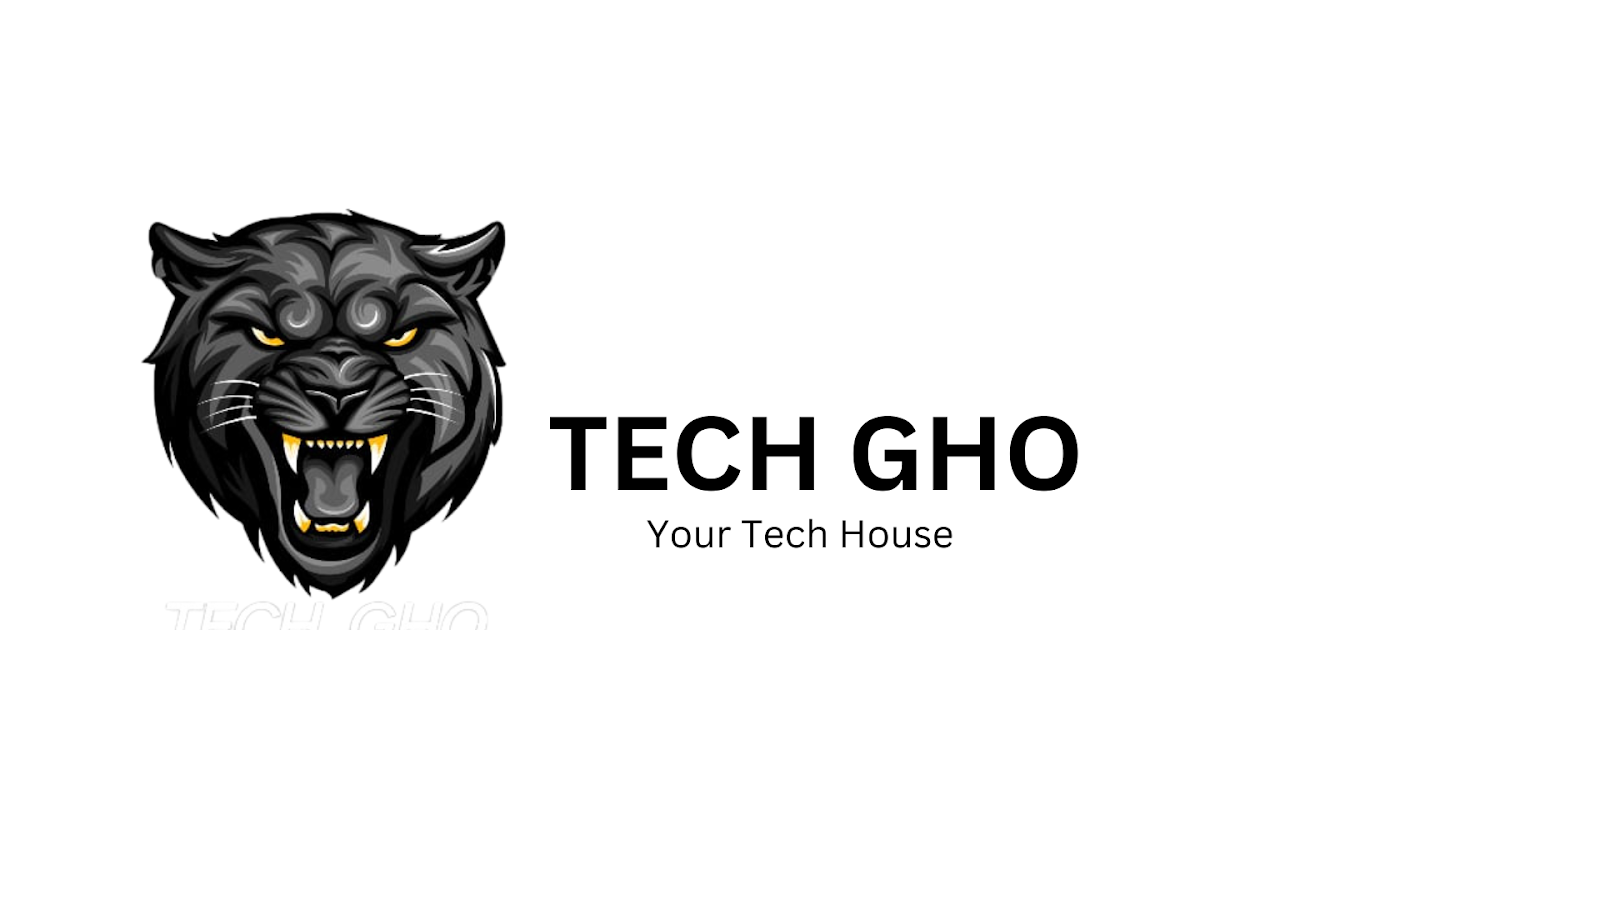 Tech Gho